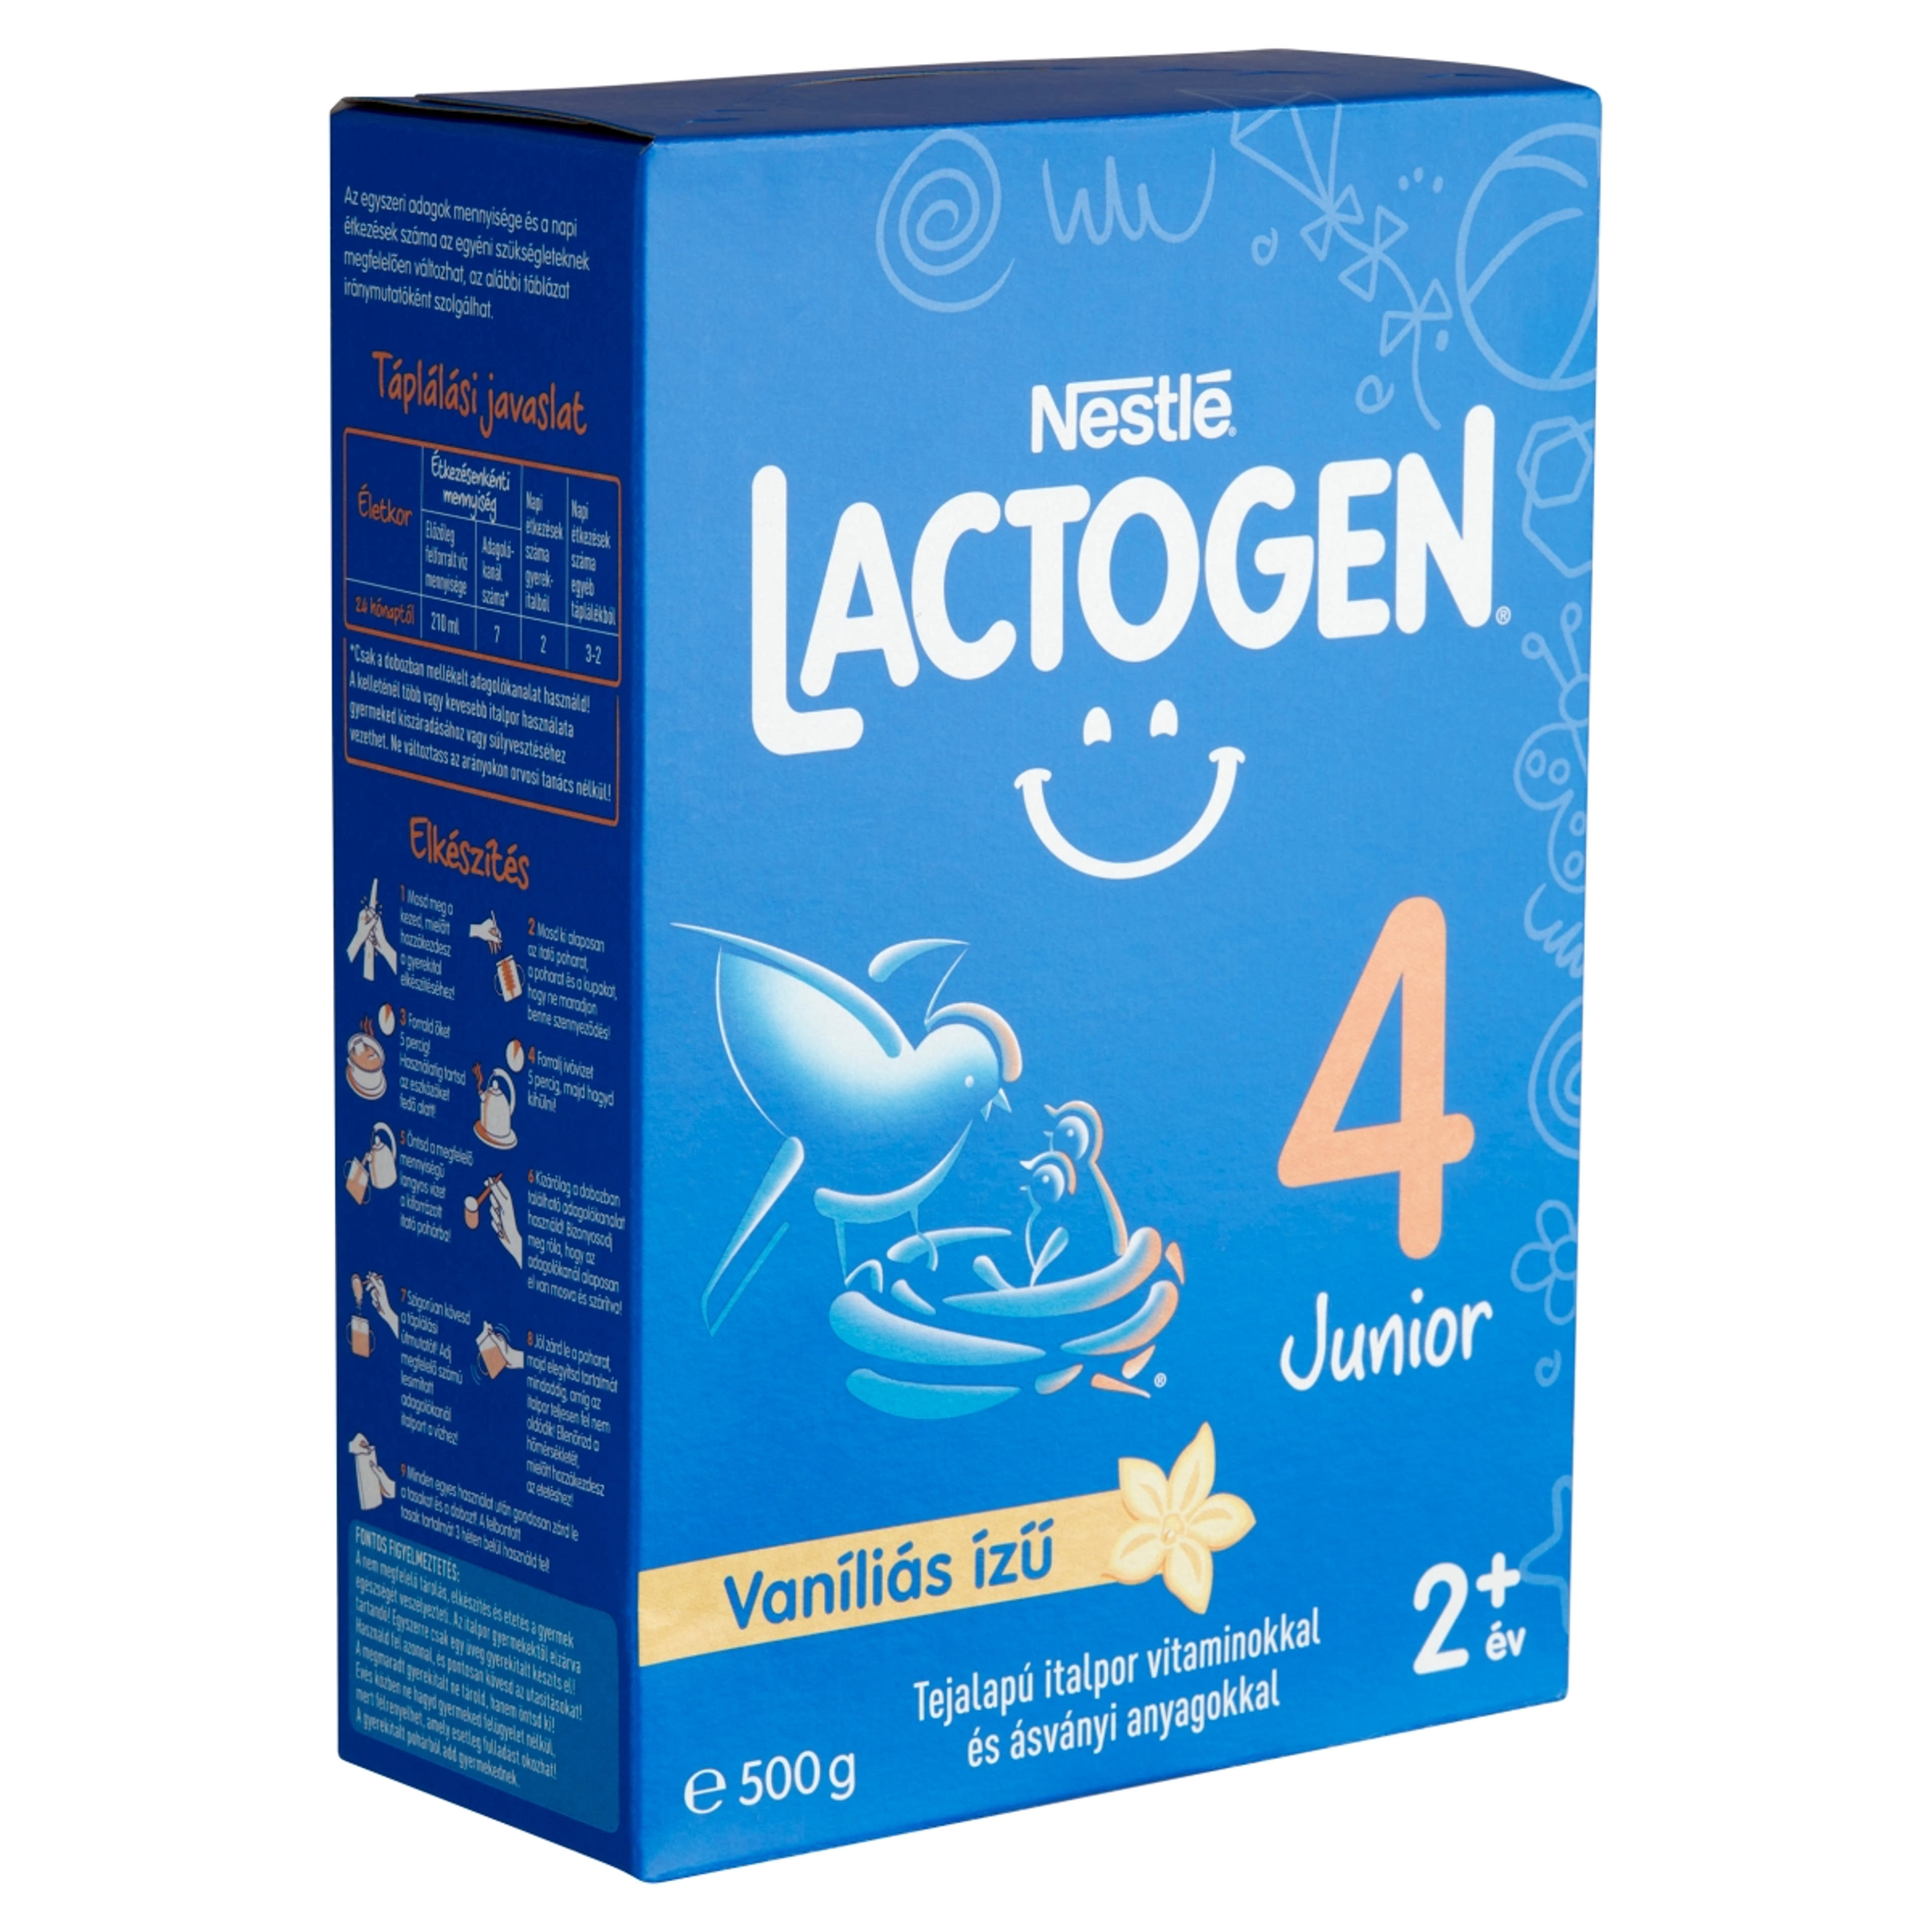 Nestlé Lactogen 4 Junior vaníliás ízű tejalapú italpor, 2 éves kortól - 500 g-2